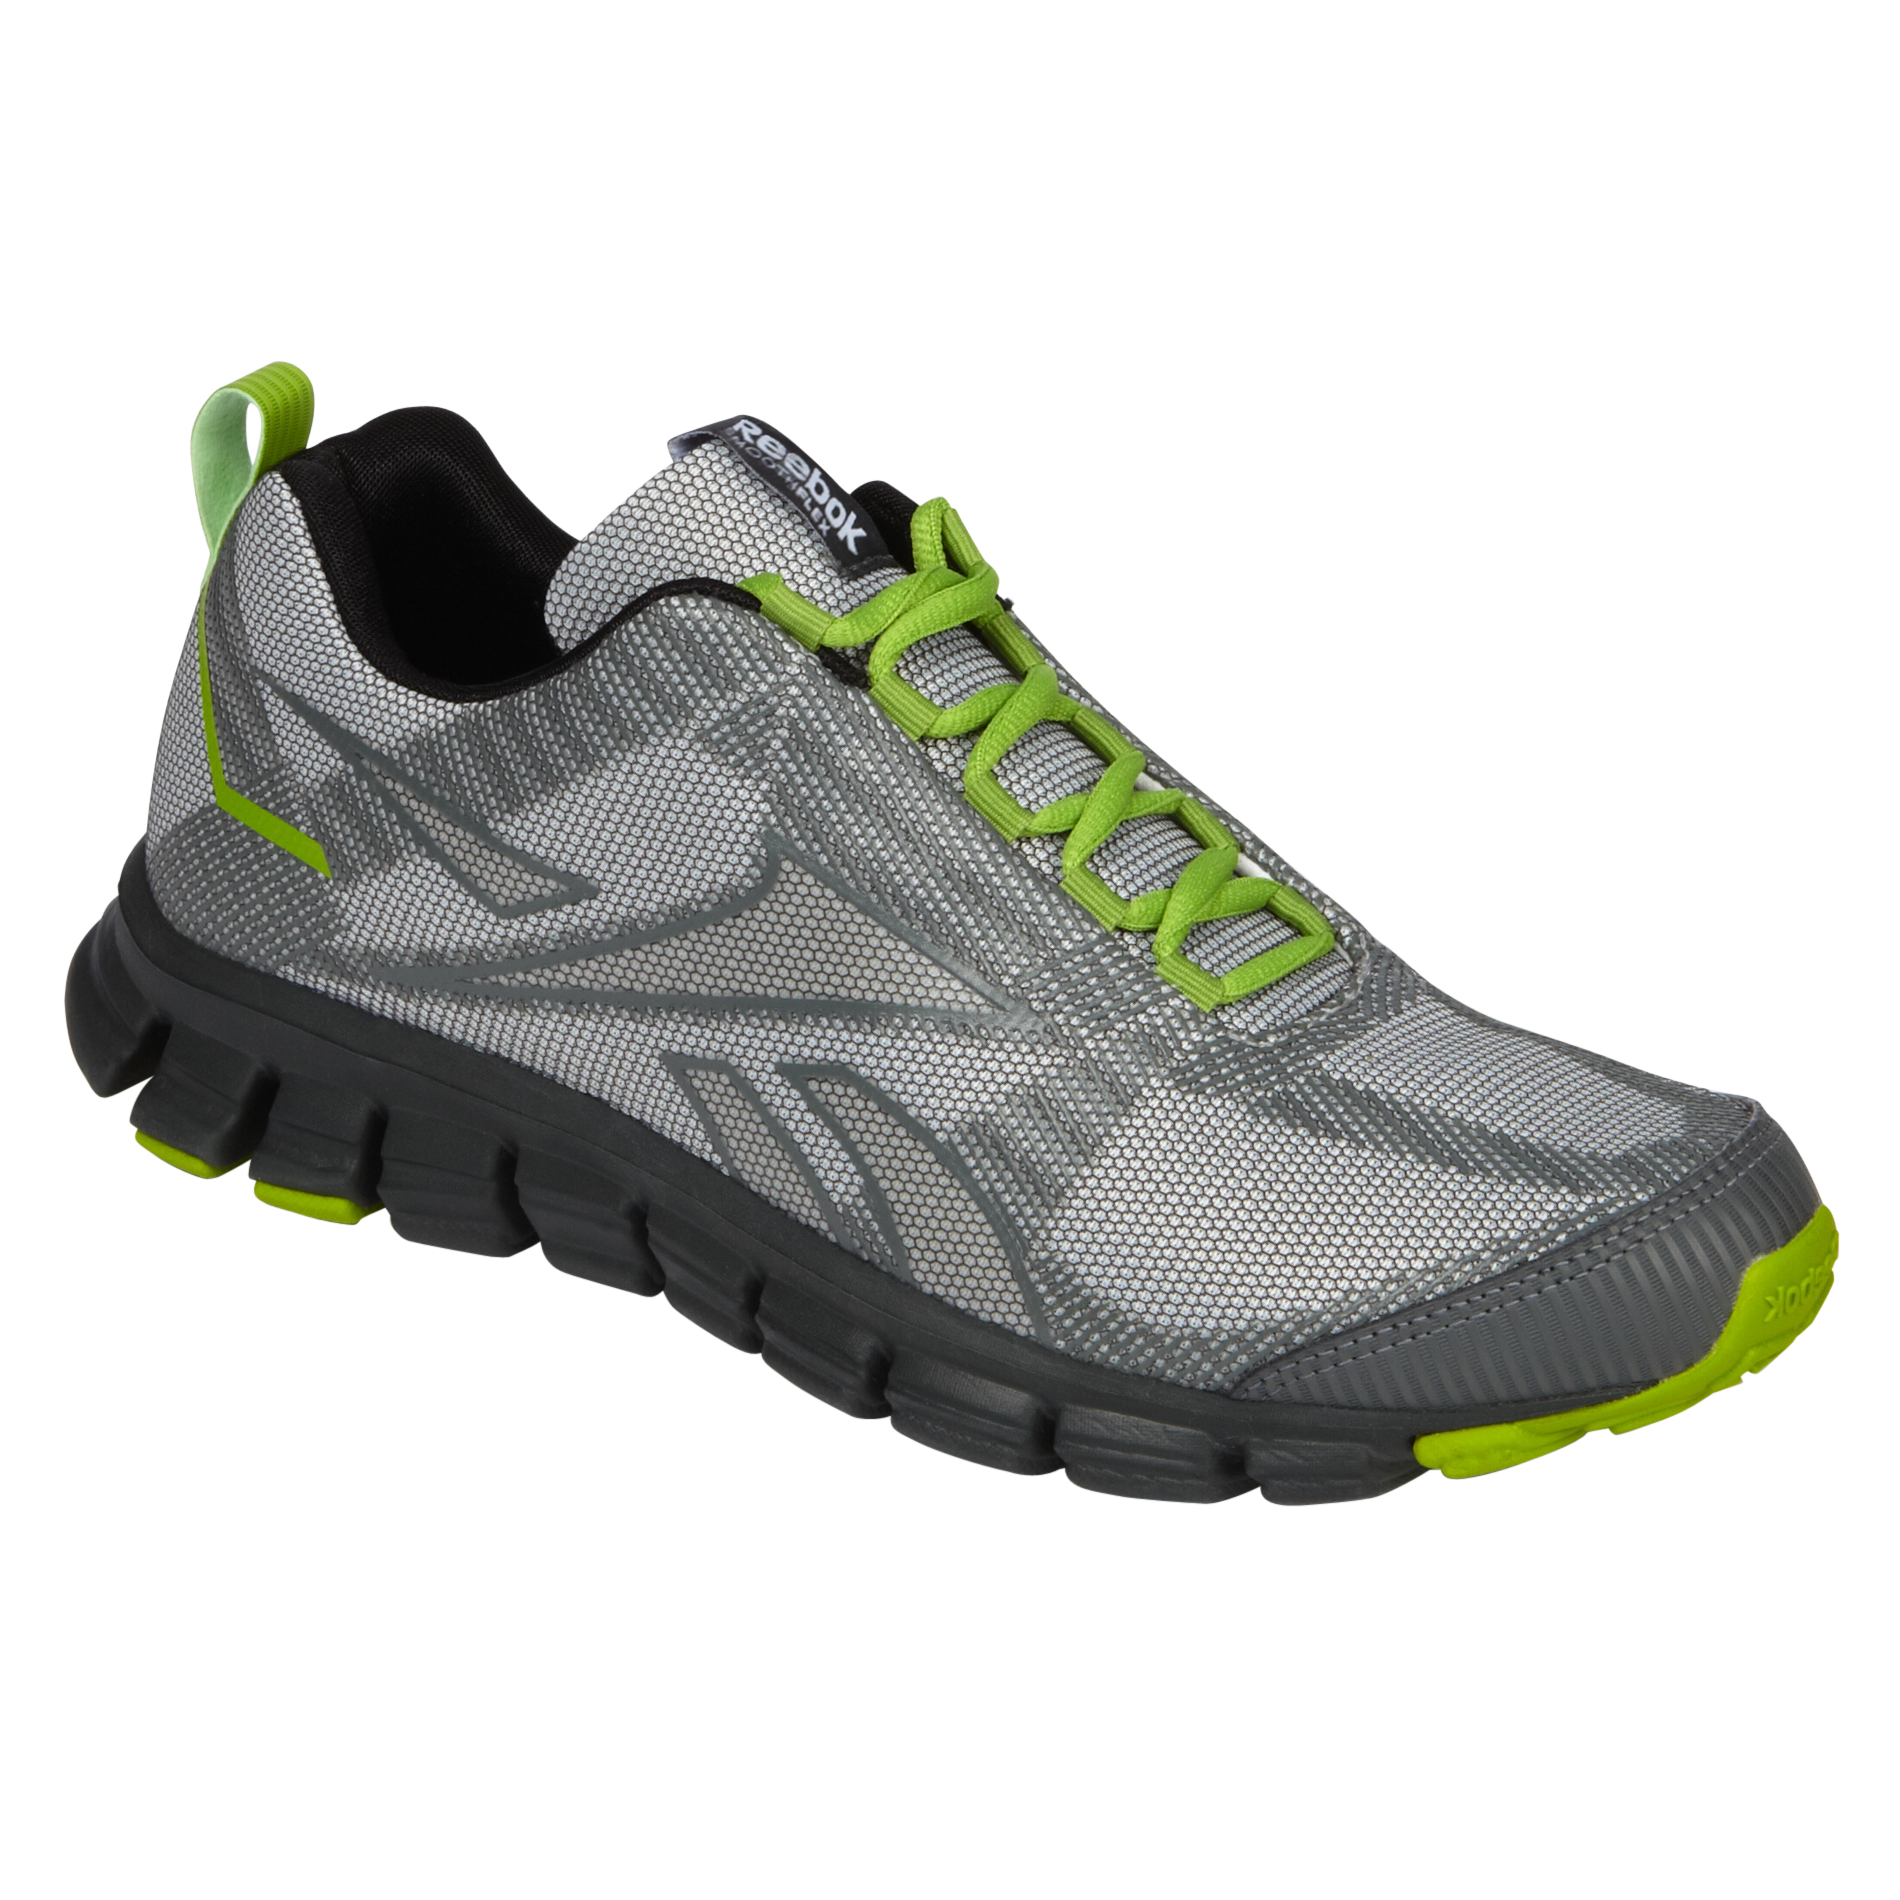 Reebok Men's Athletic Shoe Flex Trek - Grey/Lime